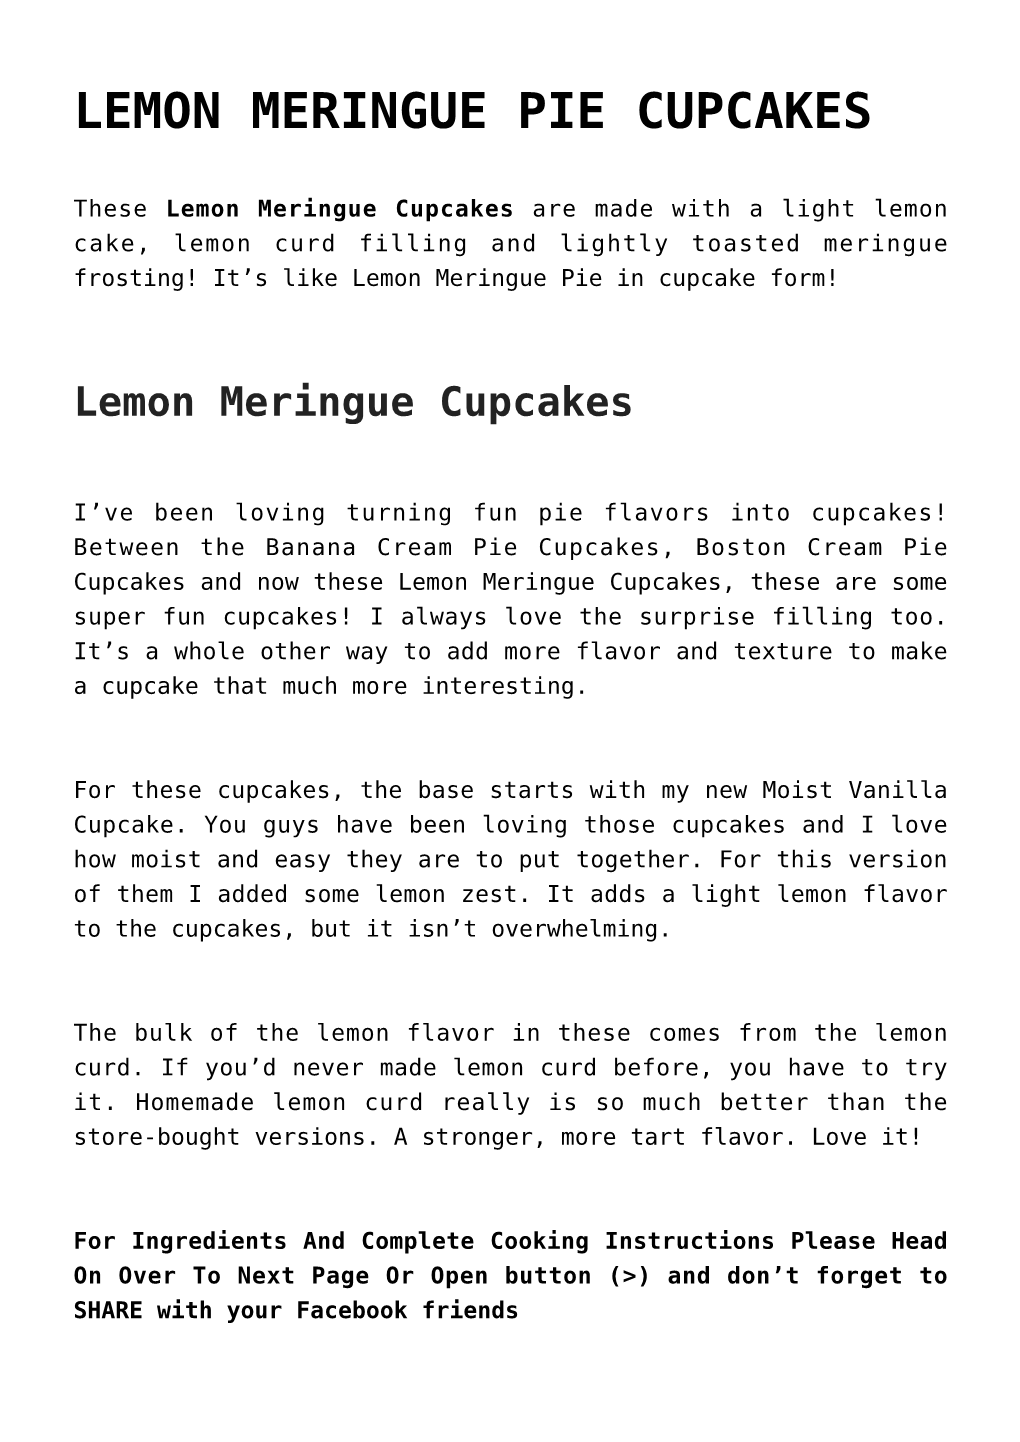 Lemon Meringue Pie Cupcakes